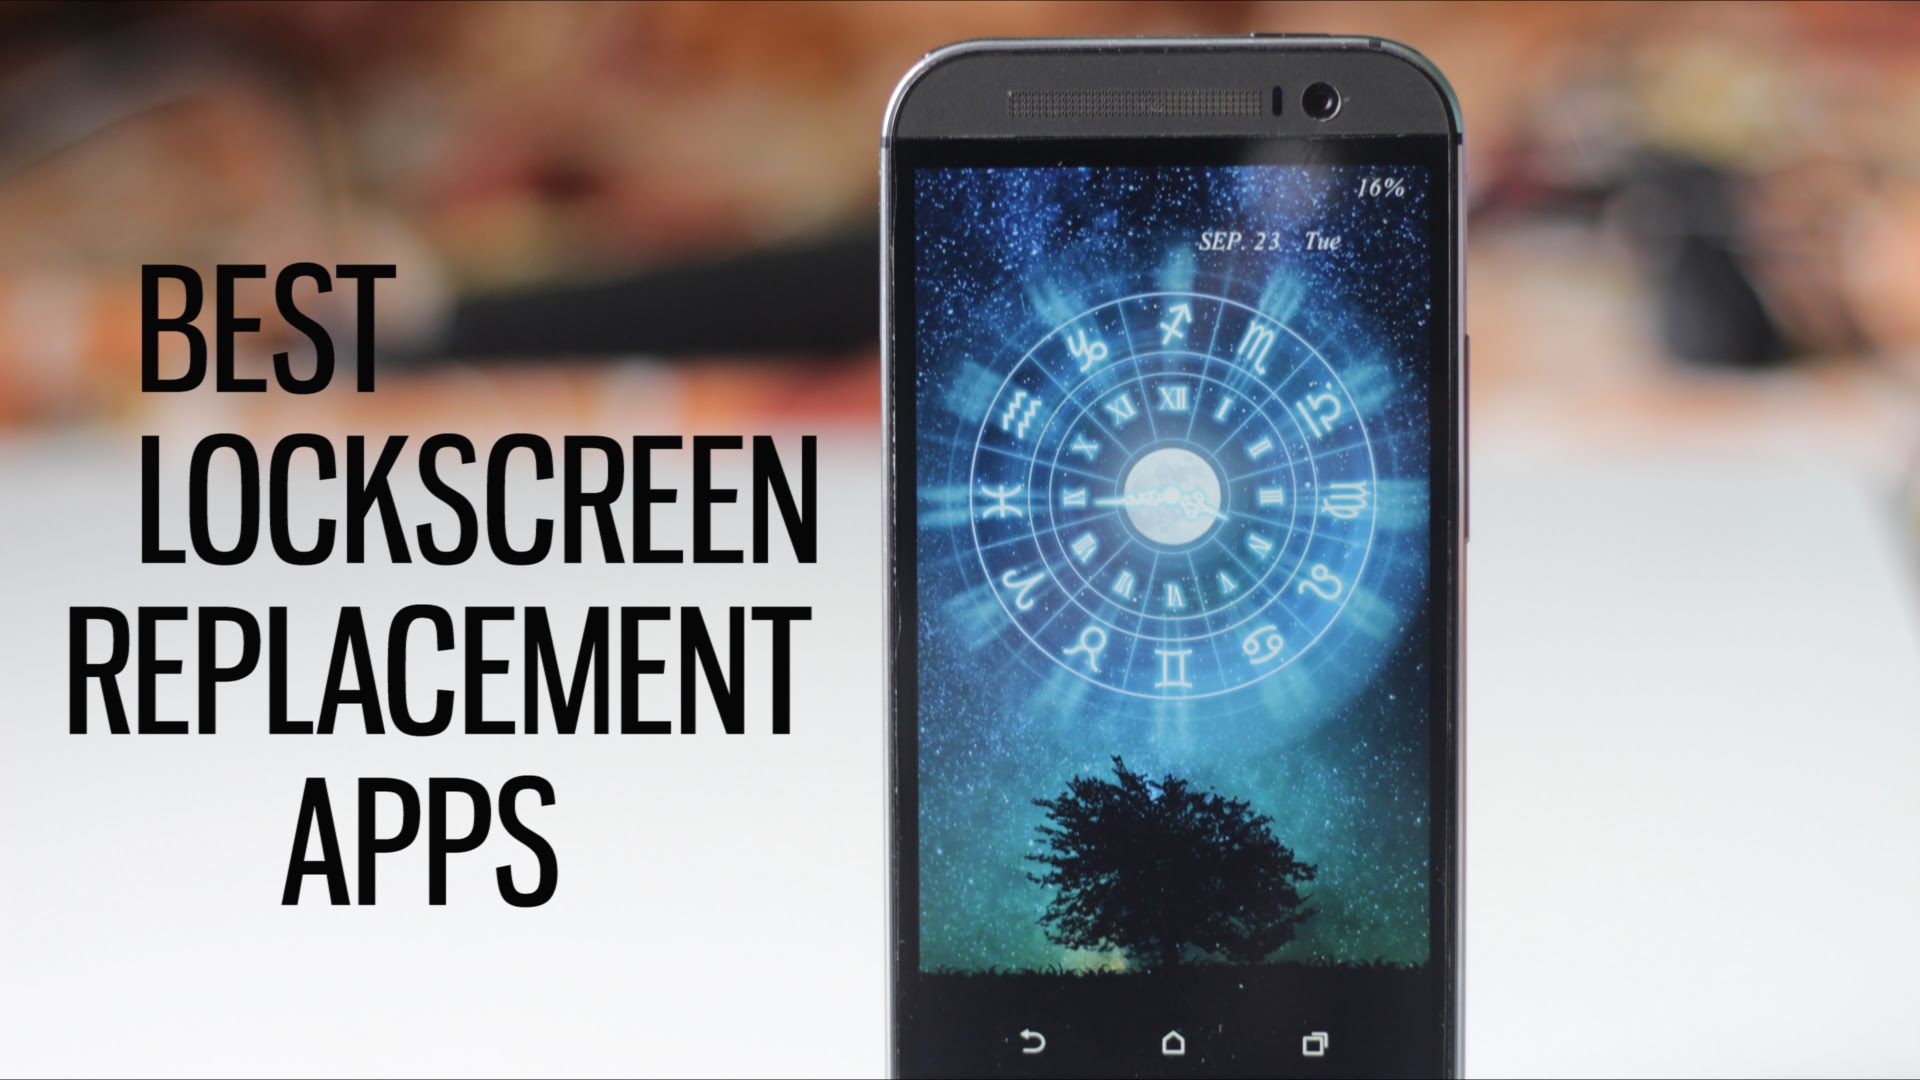 Coolest Lock Screen Picture, Coolest Lock Screen Wallpapers - Best Lockscreen Apps Android 2019 - HD Wallpaper 